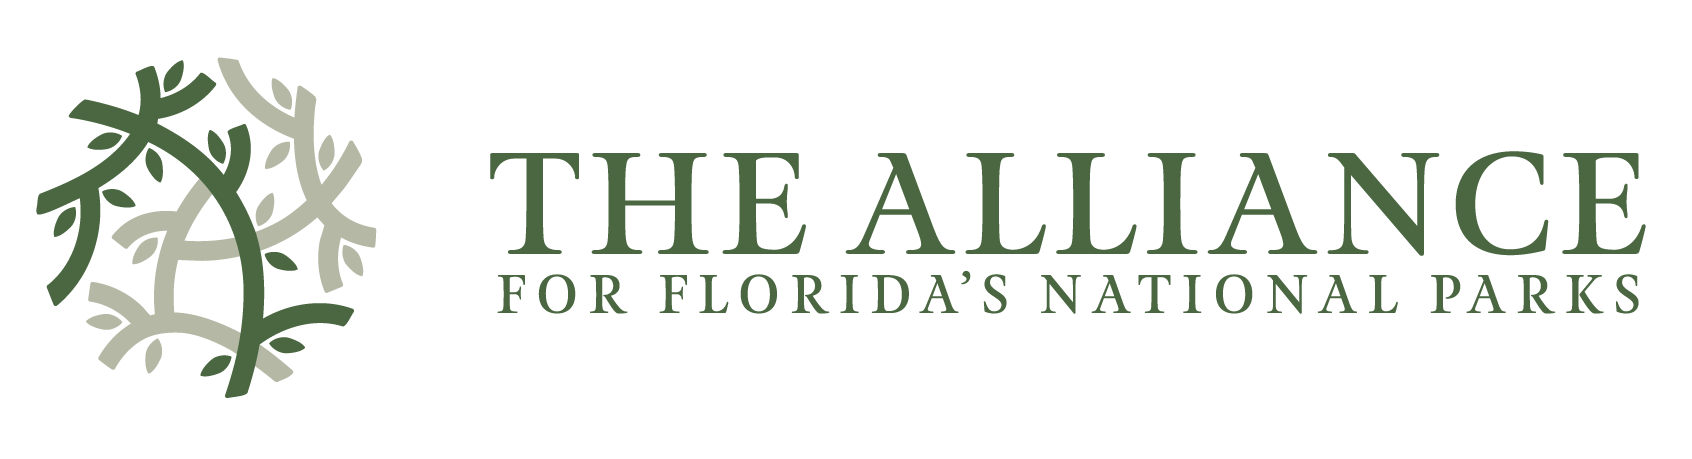 The Florida's National Parks Alliance logo